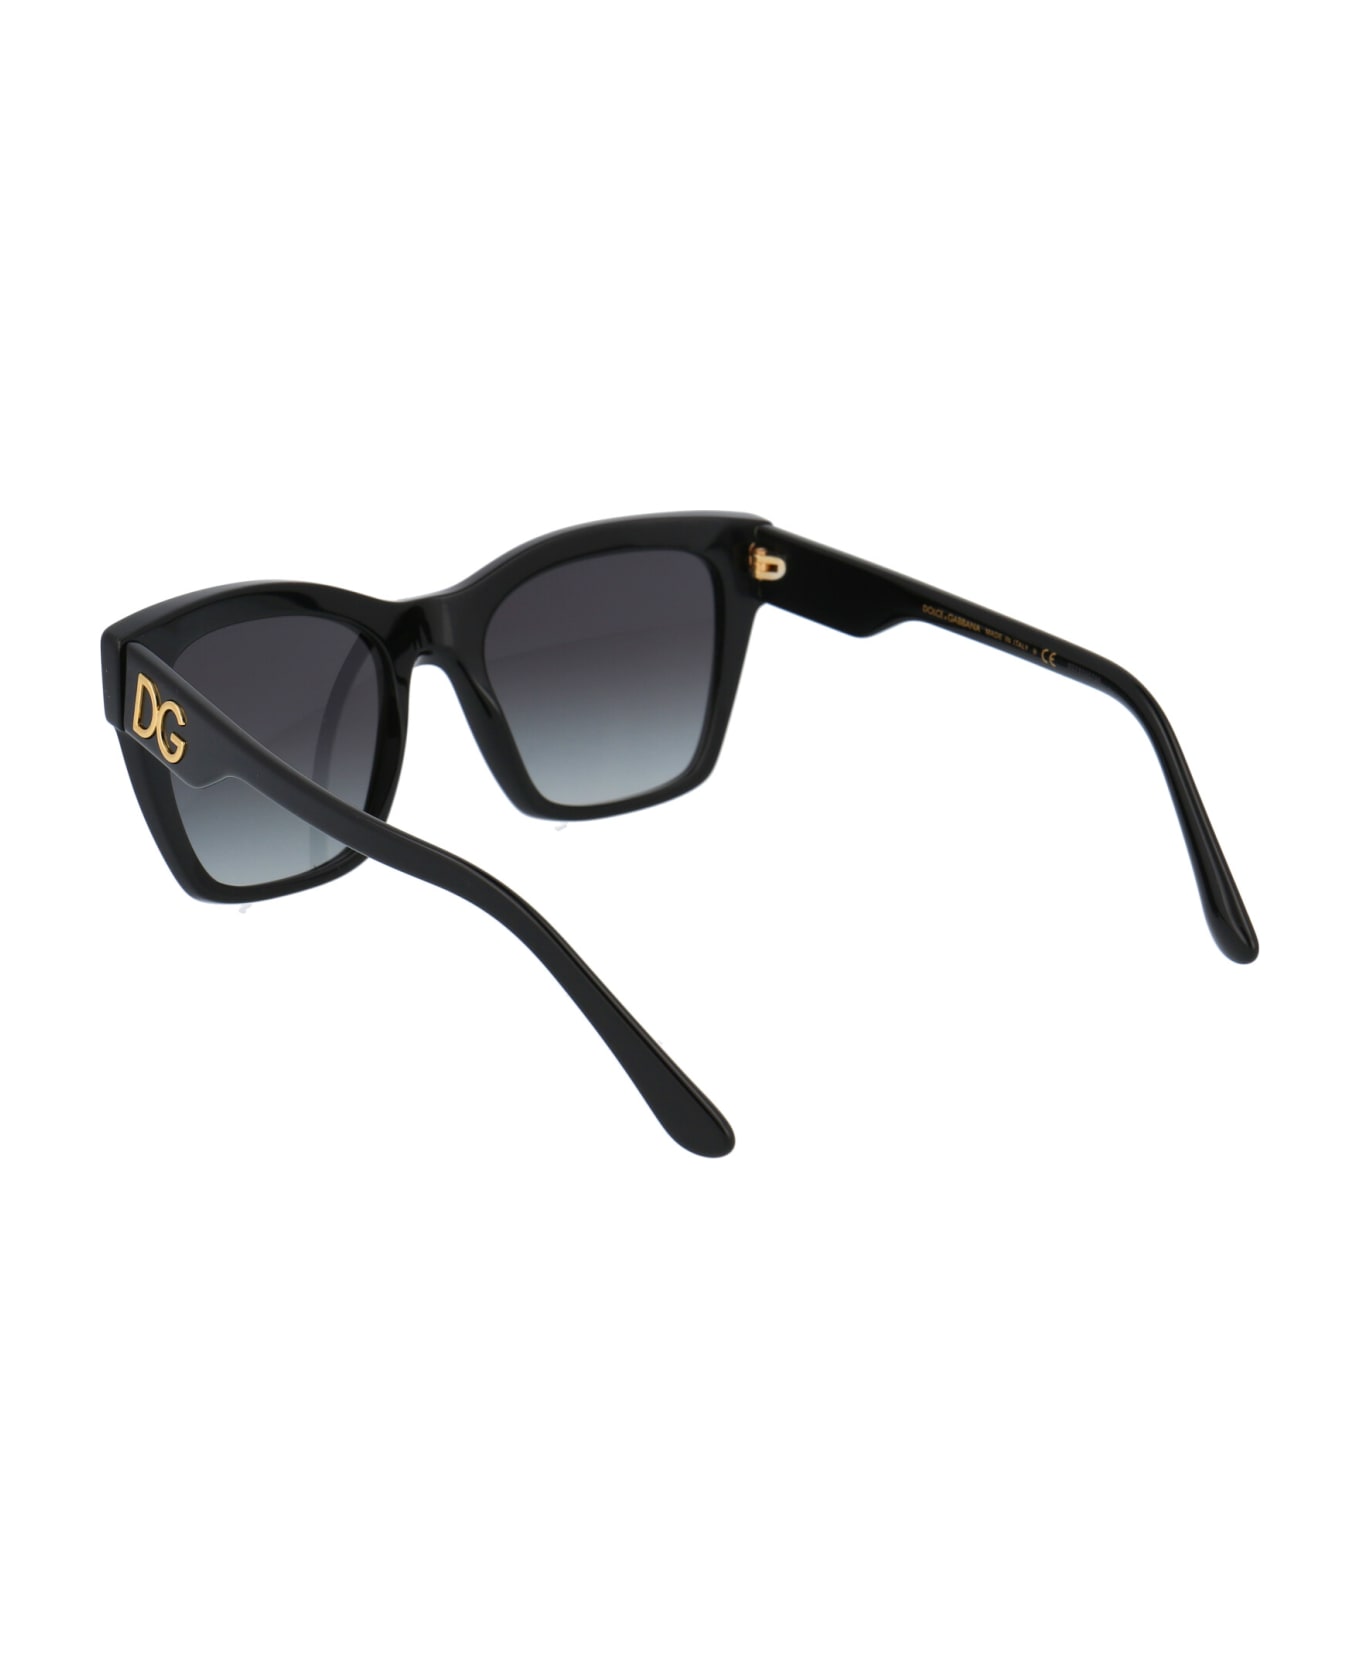 Dolce & Gabbana Eyewear 0dg4384 Sunglasses - 501/8G BLACK